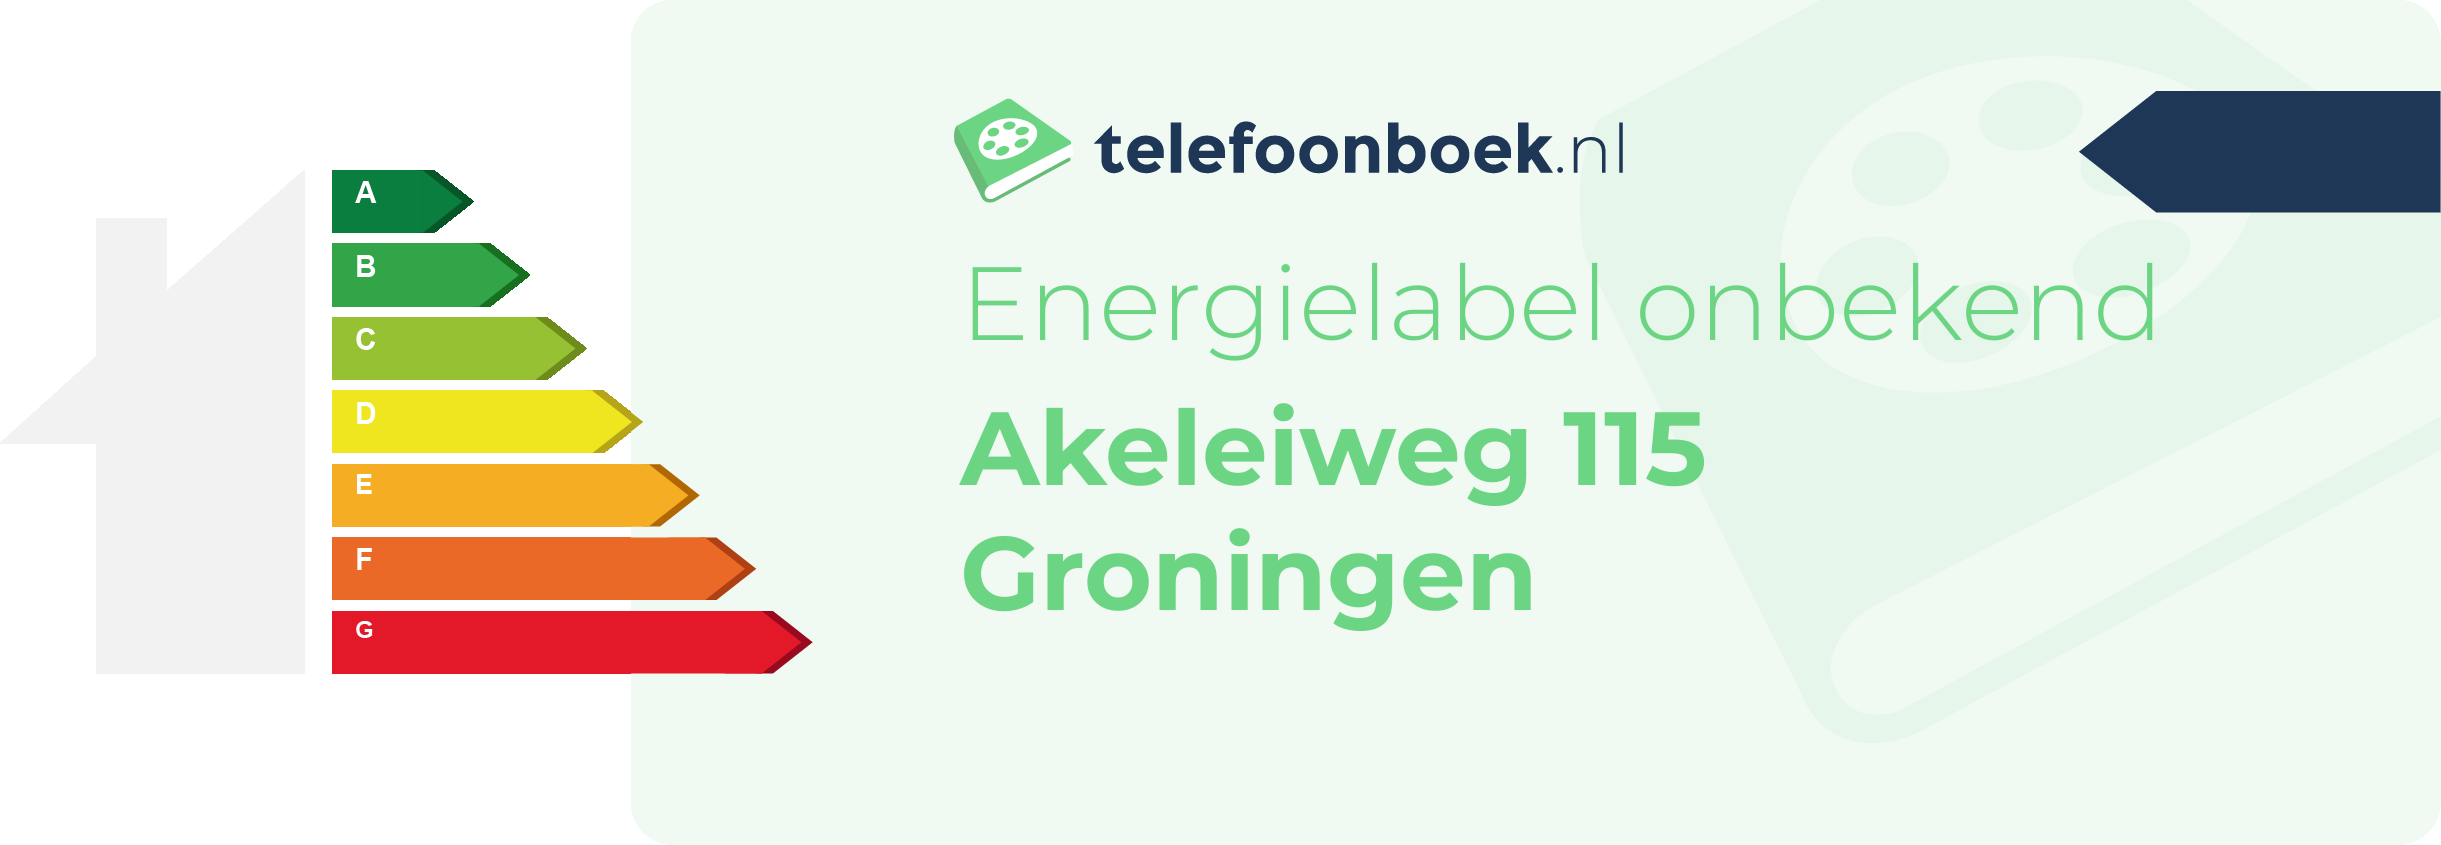 Energielabel Akeleiweg 115 Groningen